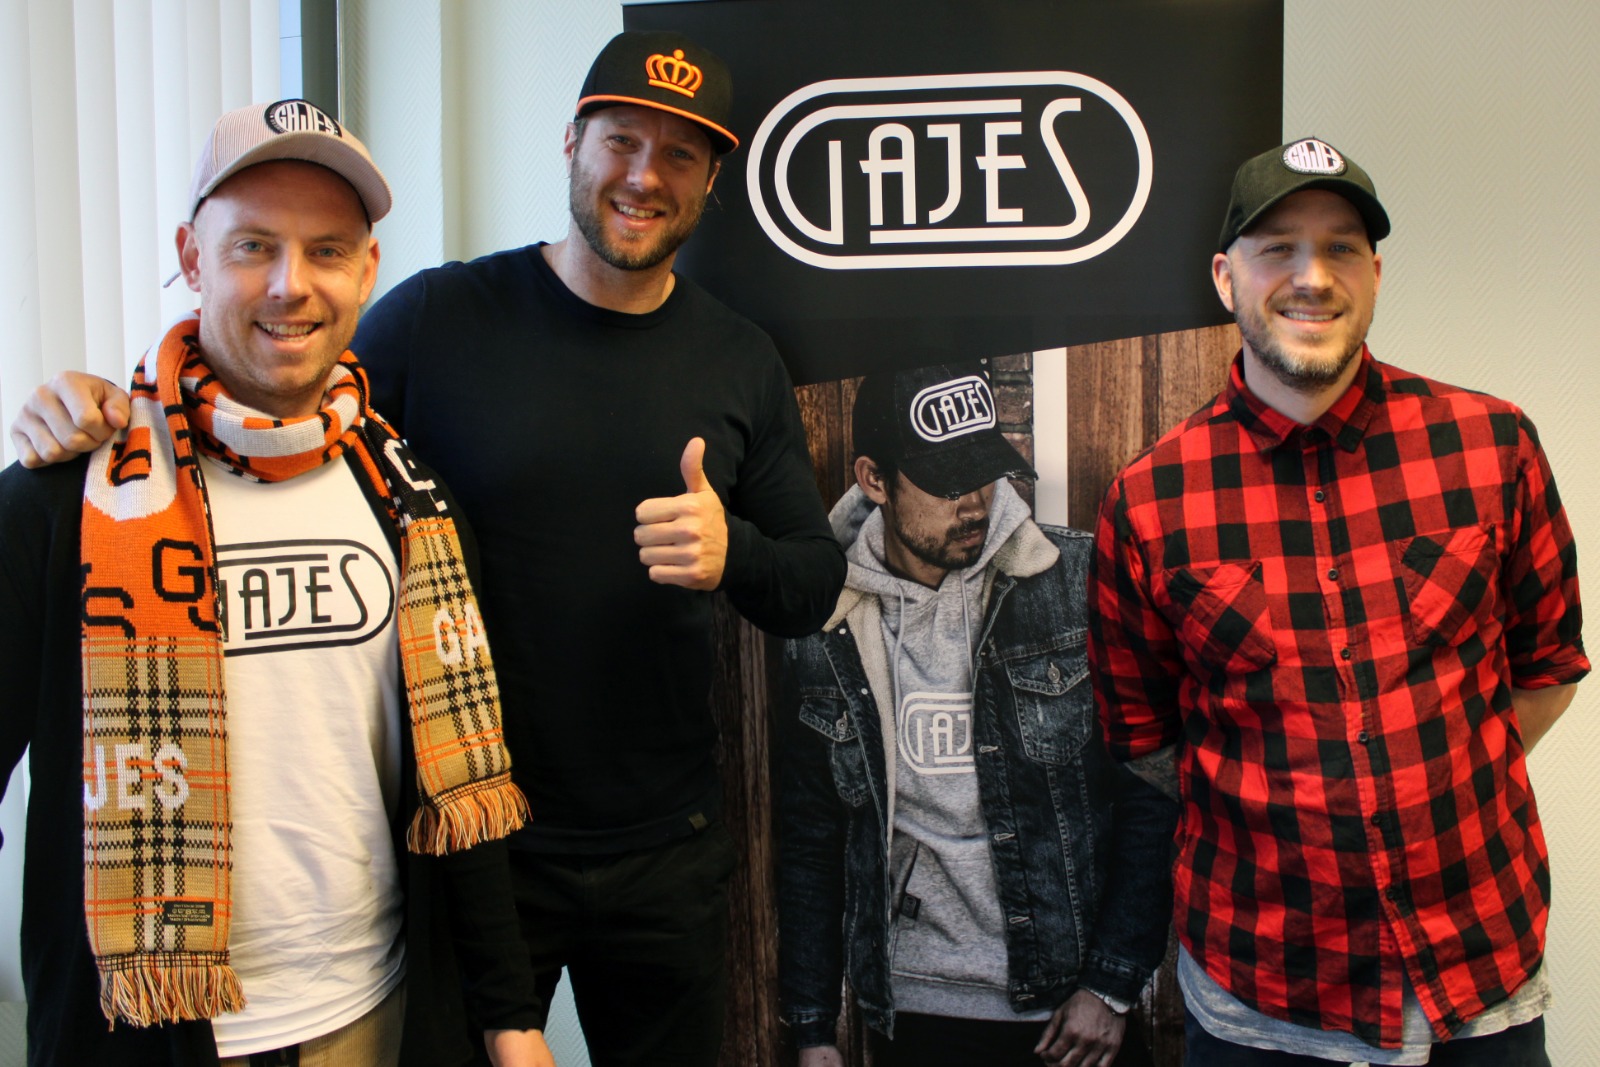 Hoe dan ook Afdrukken Toestemming Gajes is Official Headwear Partner van Team Kingdom of the Netherlands |  KNBSB